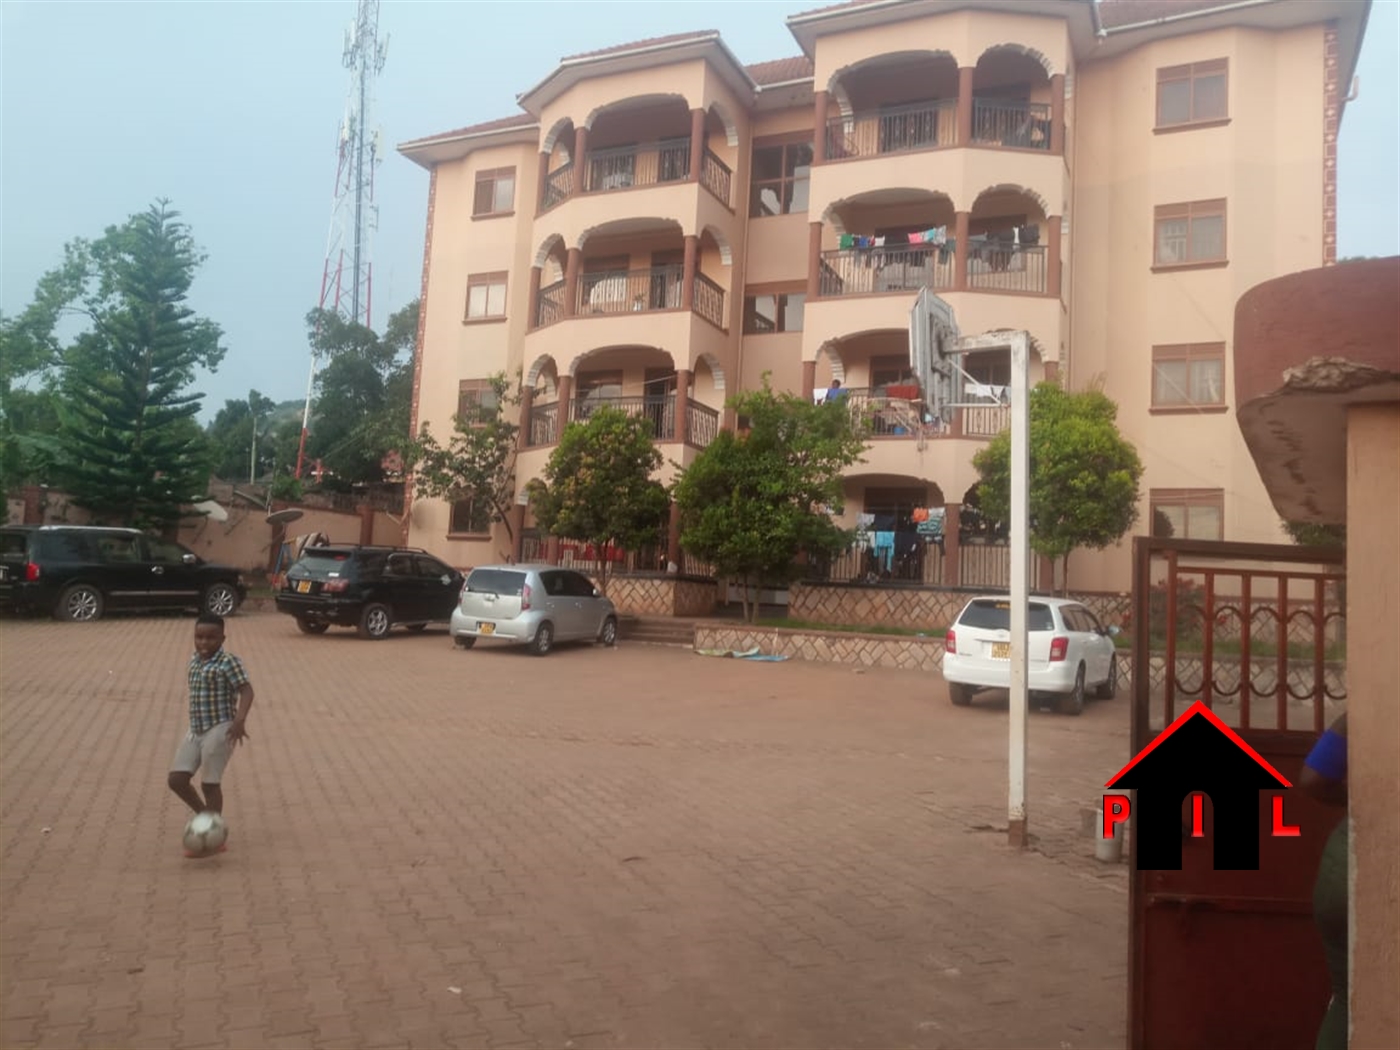 Apartment block for sale in Munyonyo Wakiso